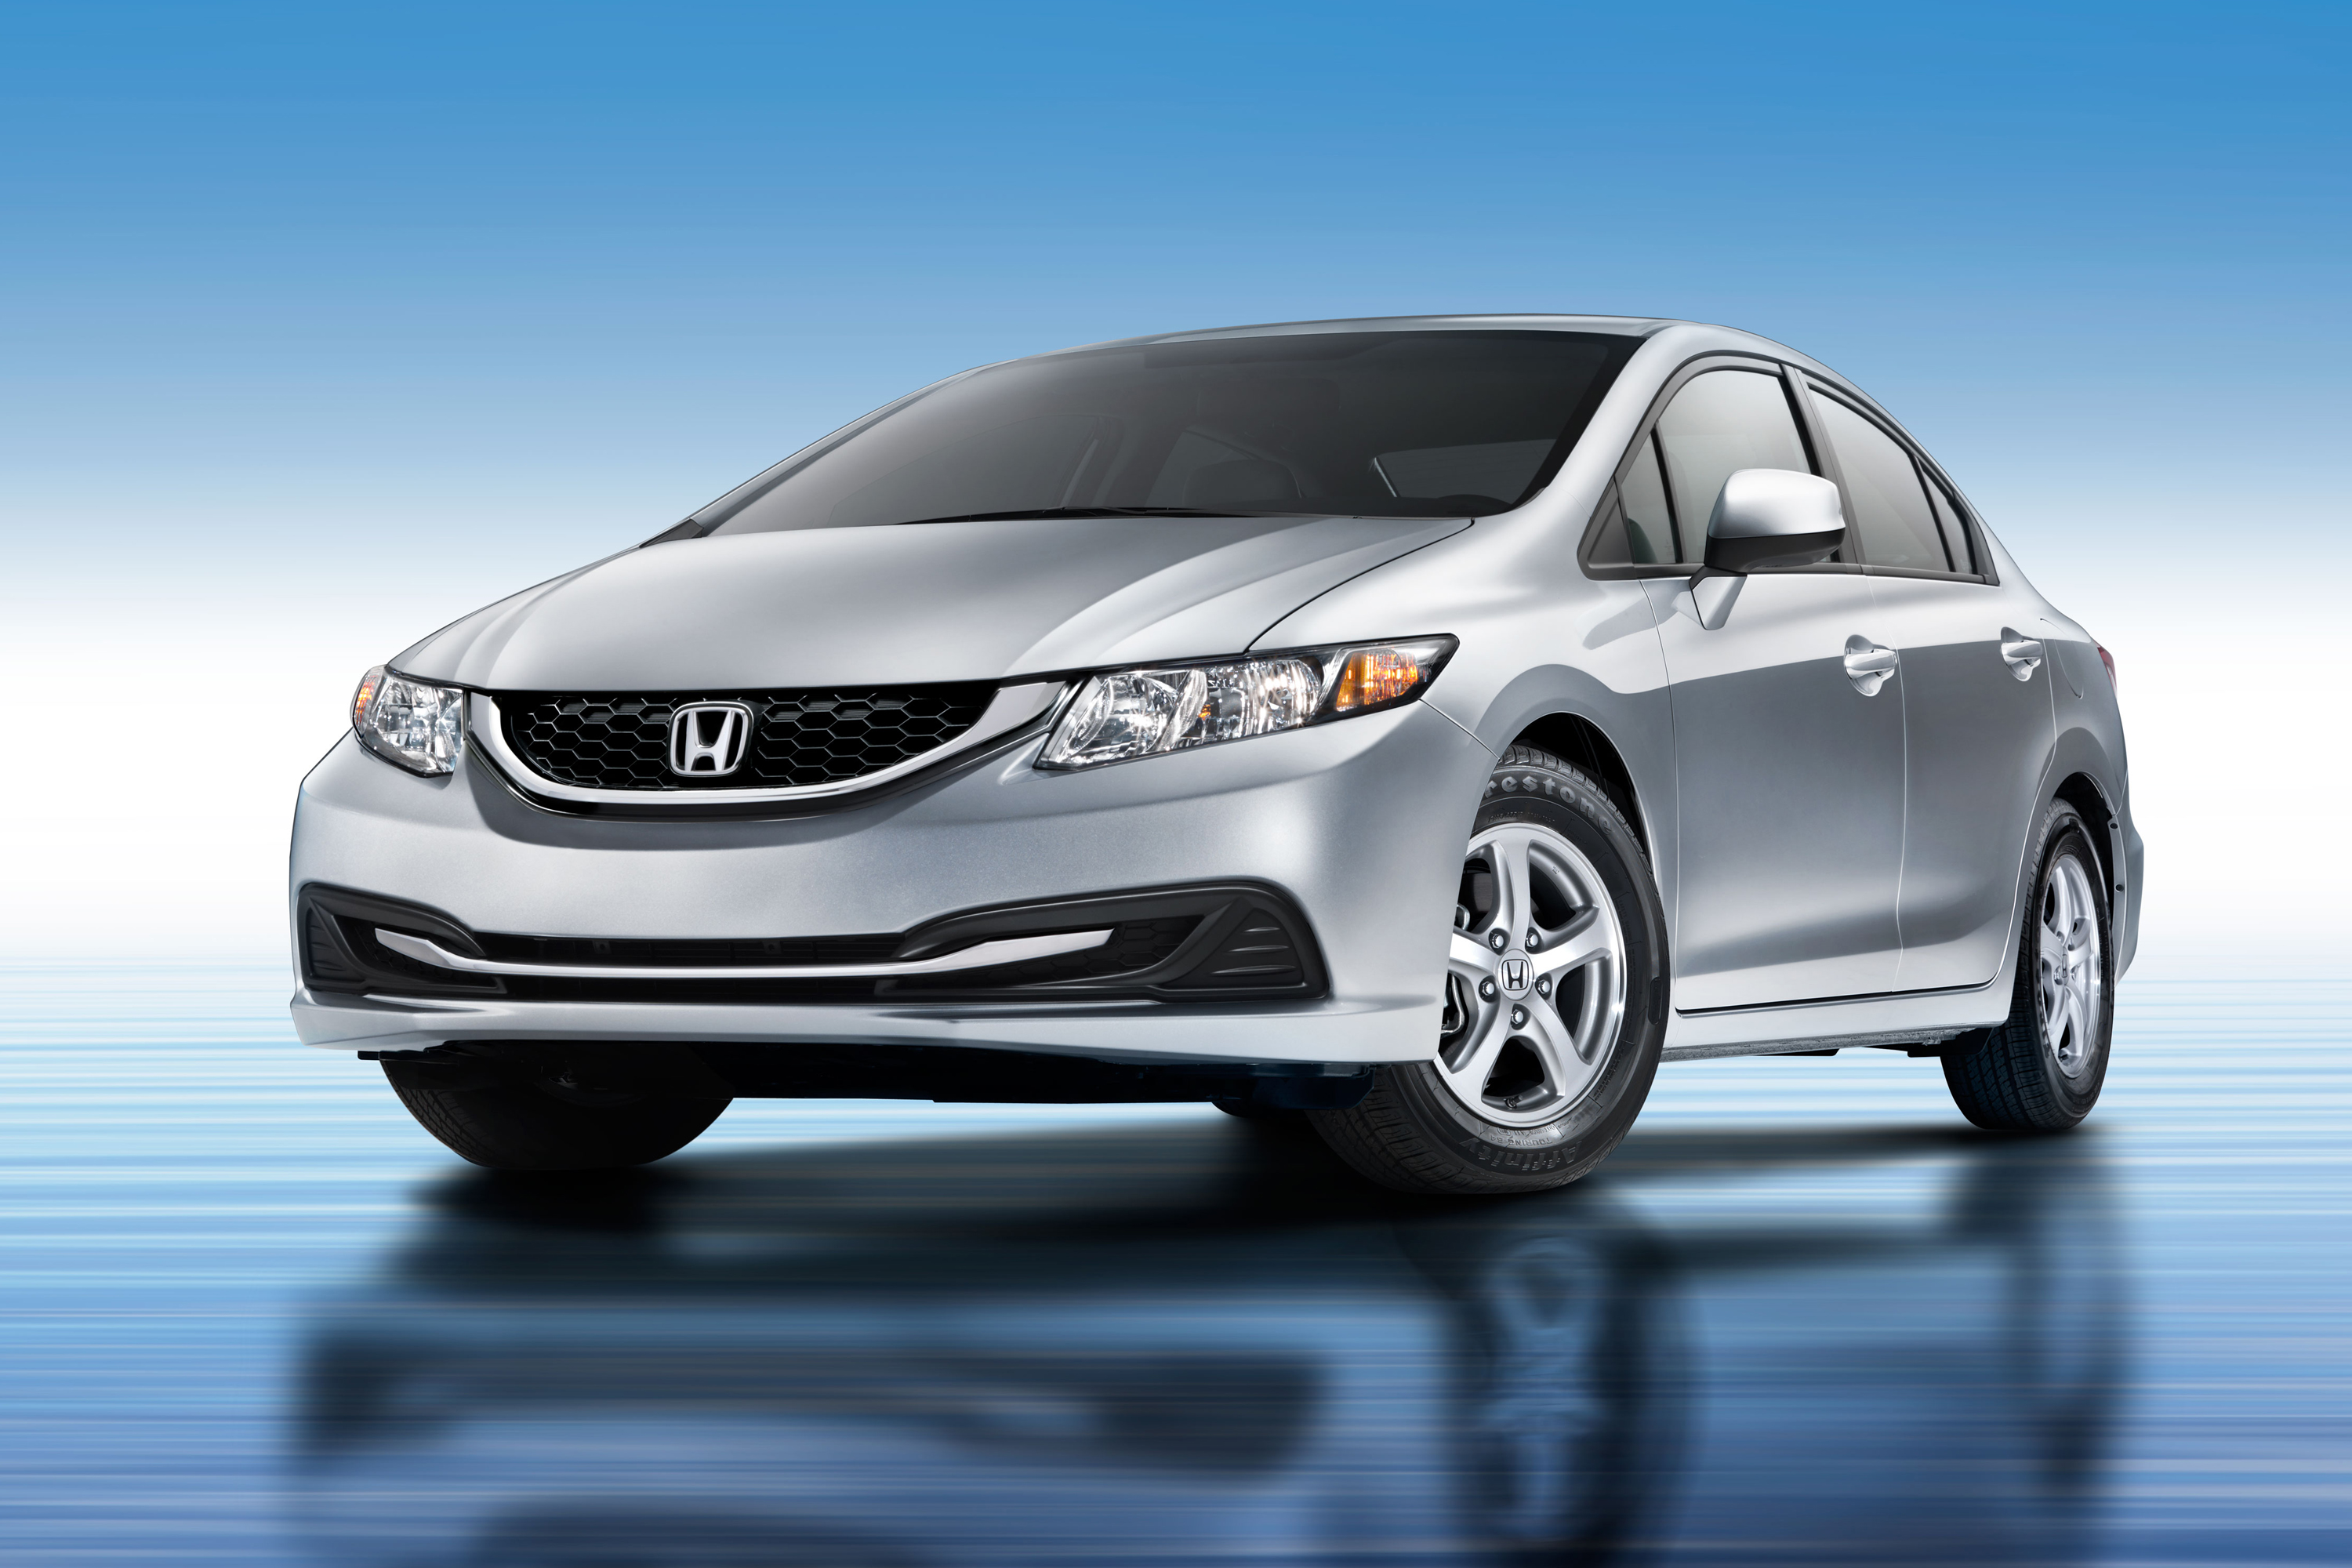 Авто зонда. Honda Civic 2013. Honda Civic 4d 2015. Honda Civic 2014 седан. Honda Civic 2013 седан.